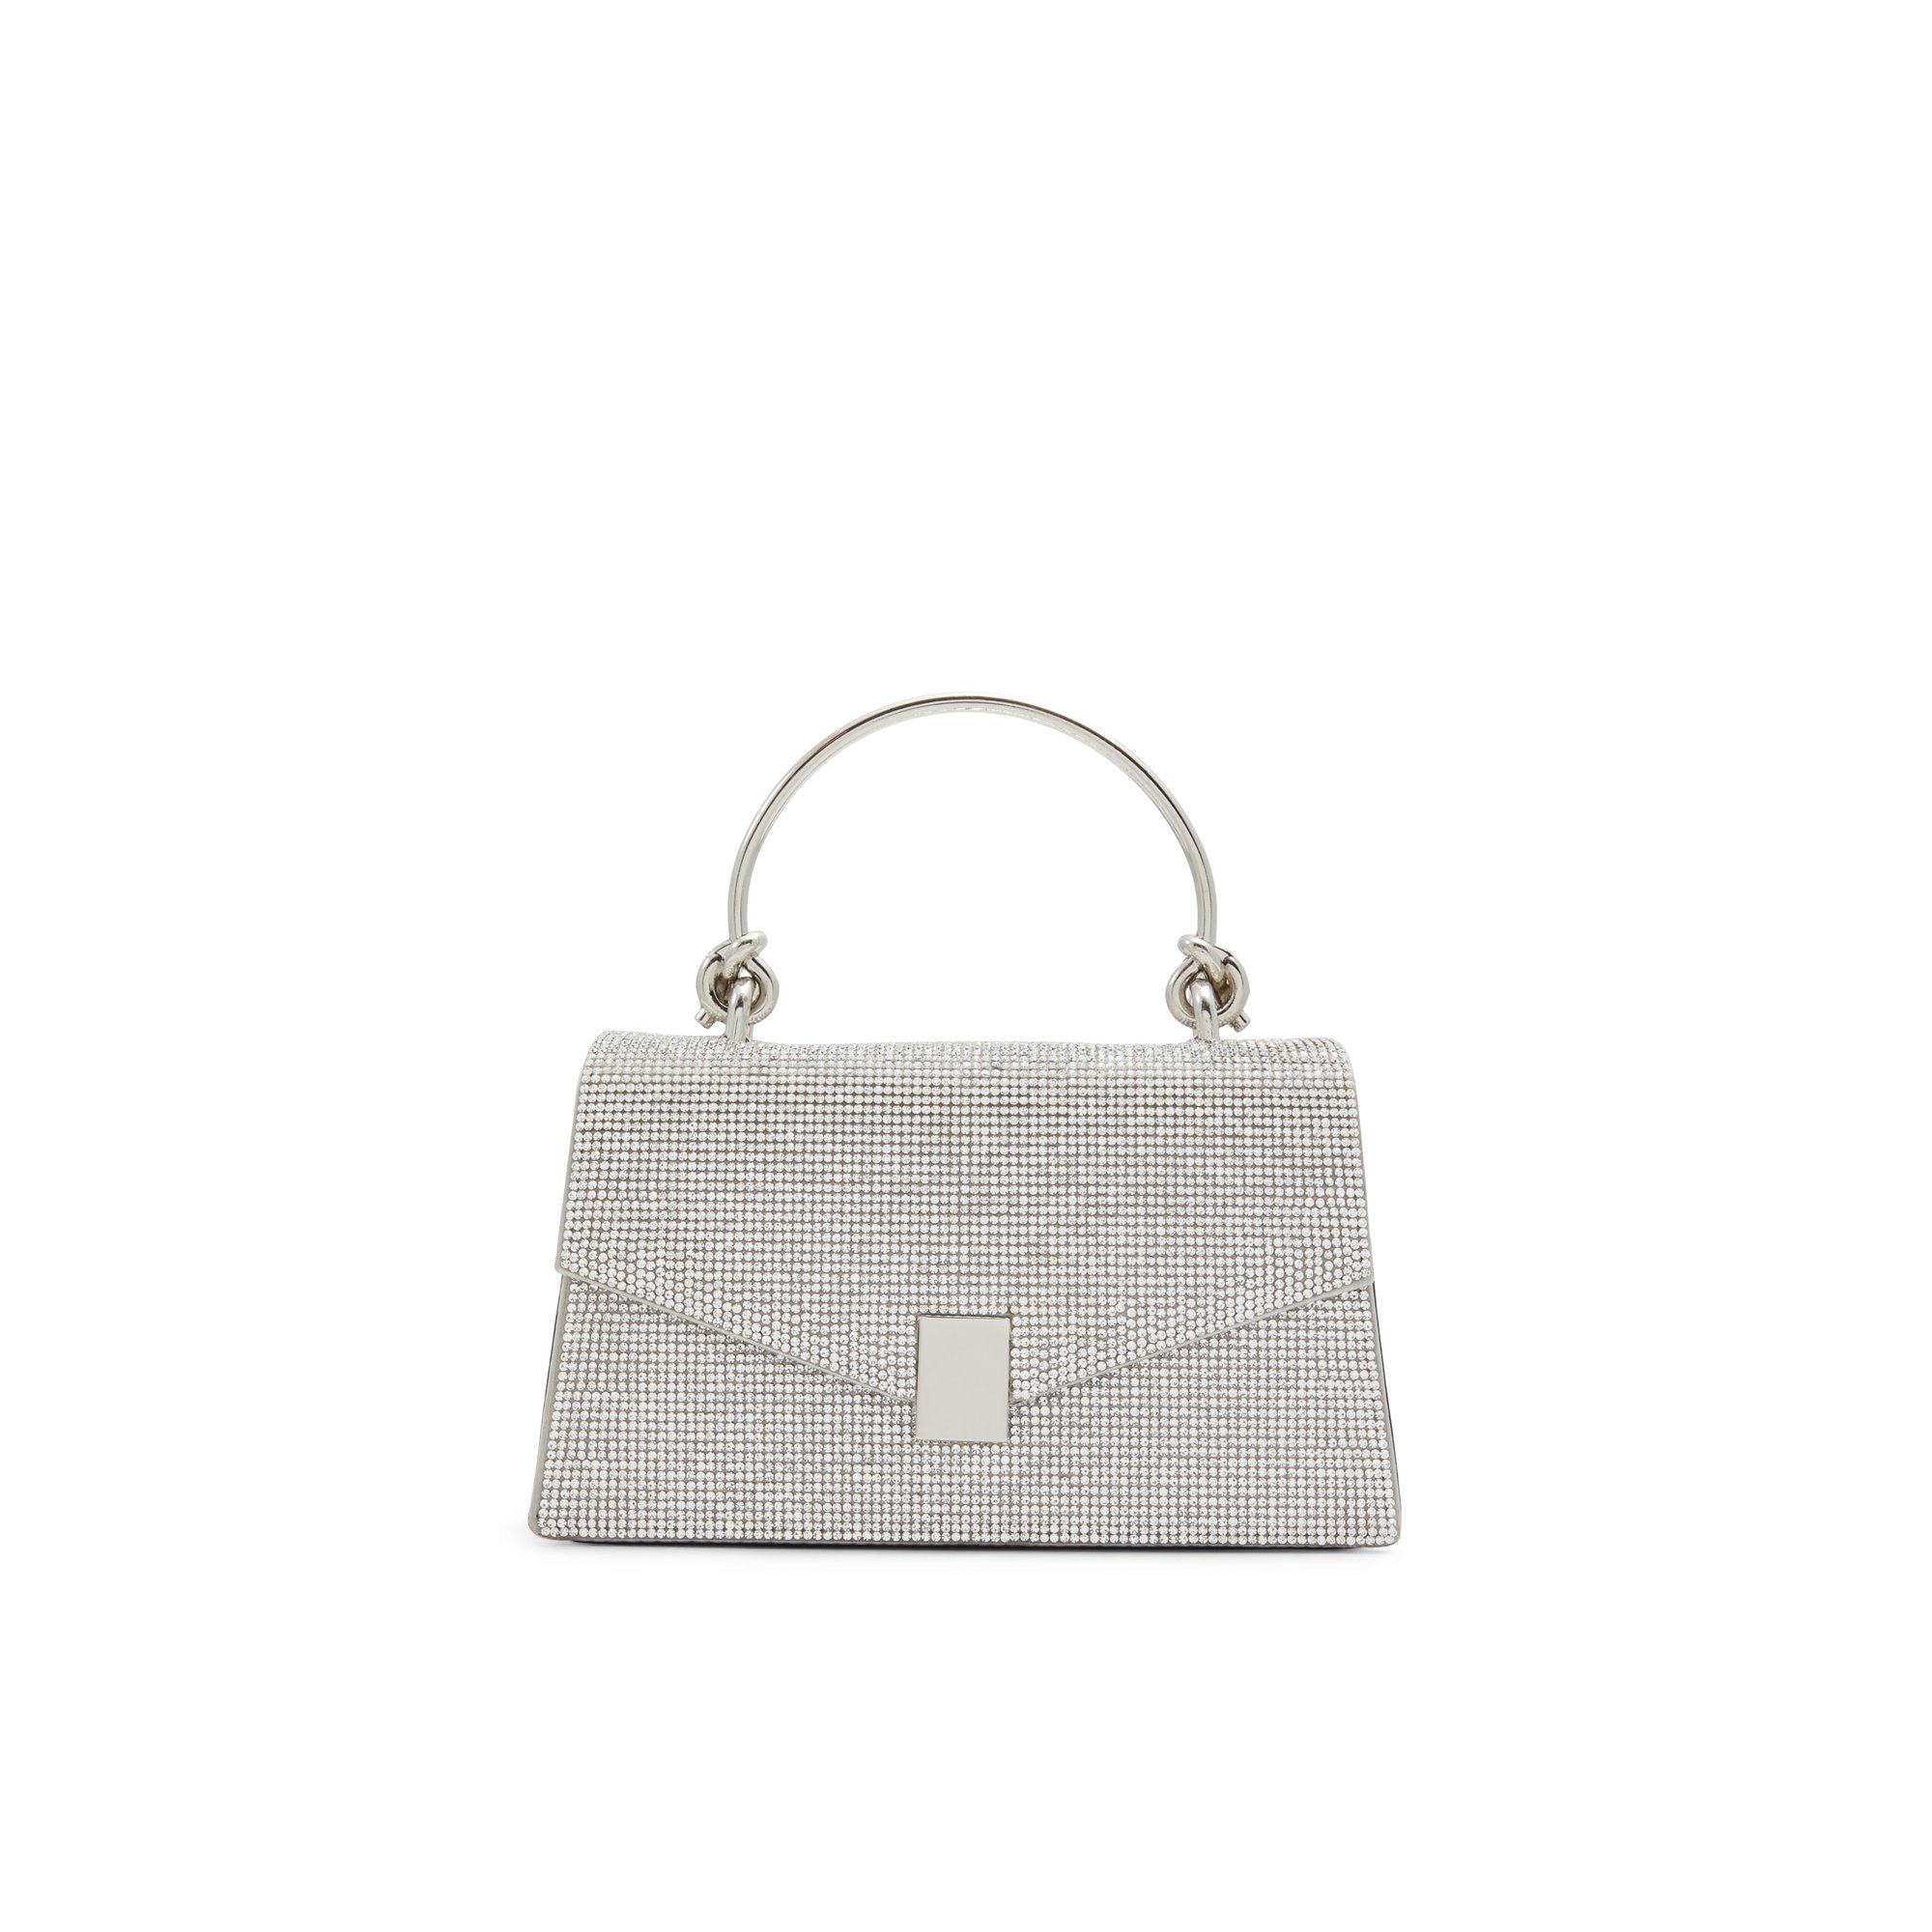 ALDO Miramax - Women's Top Handle Handbag - Silver